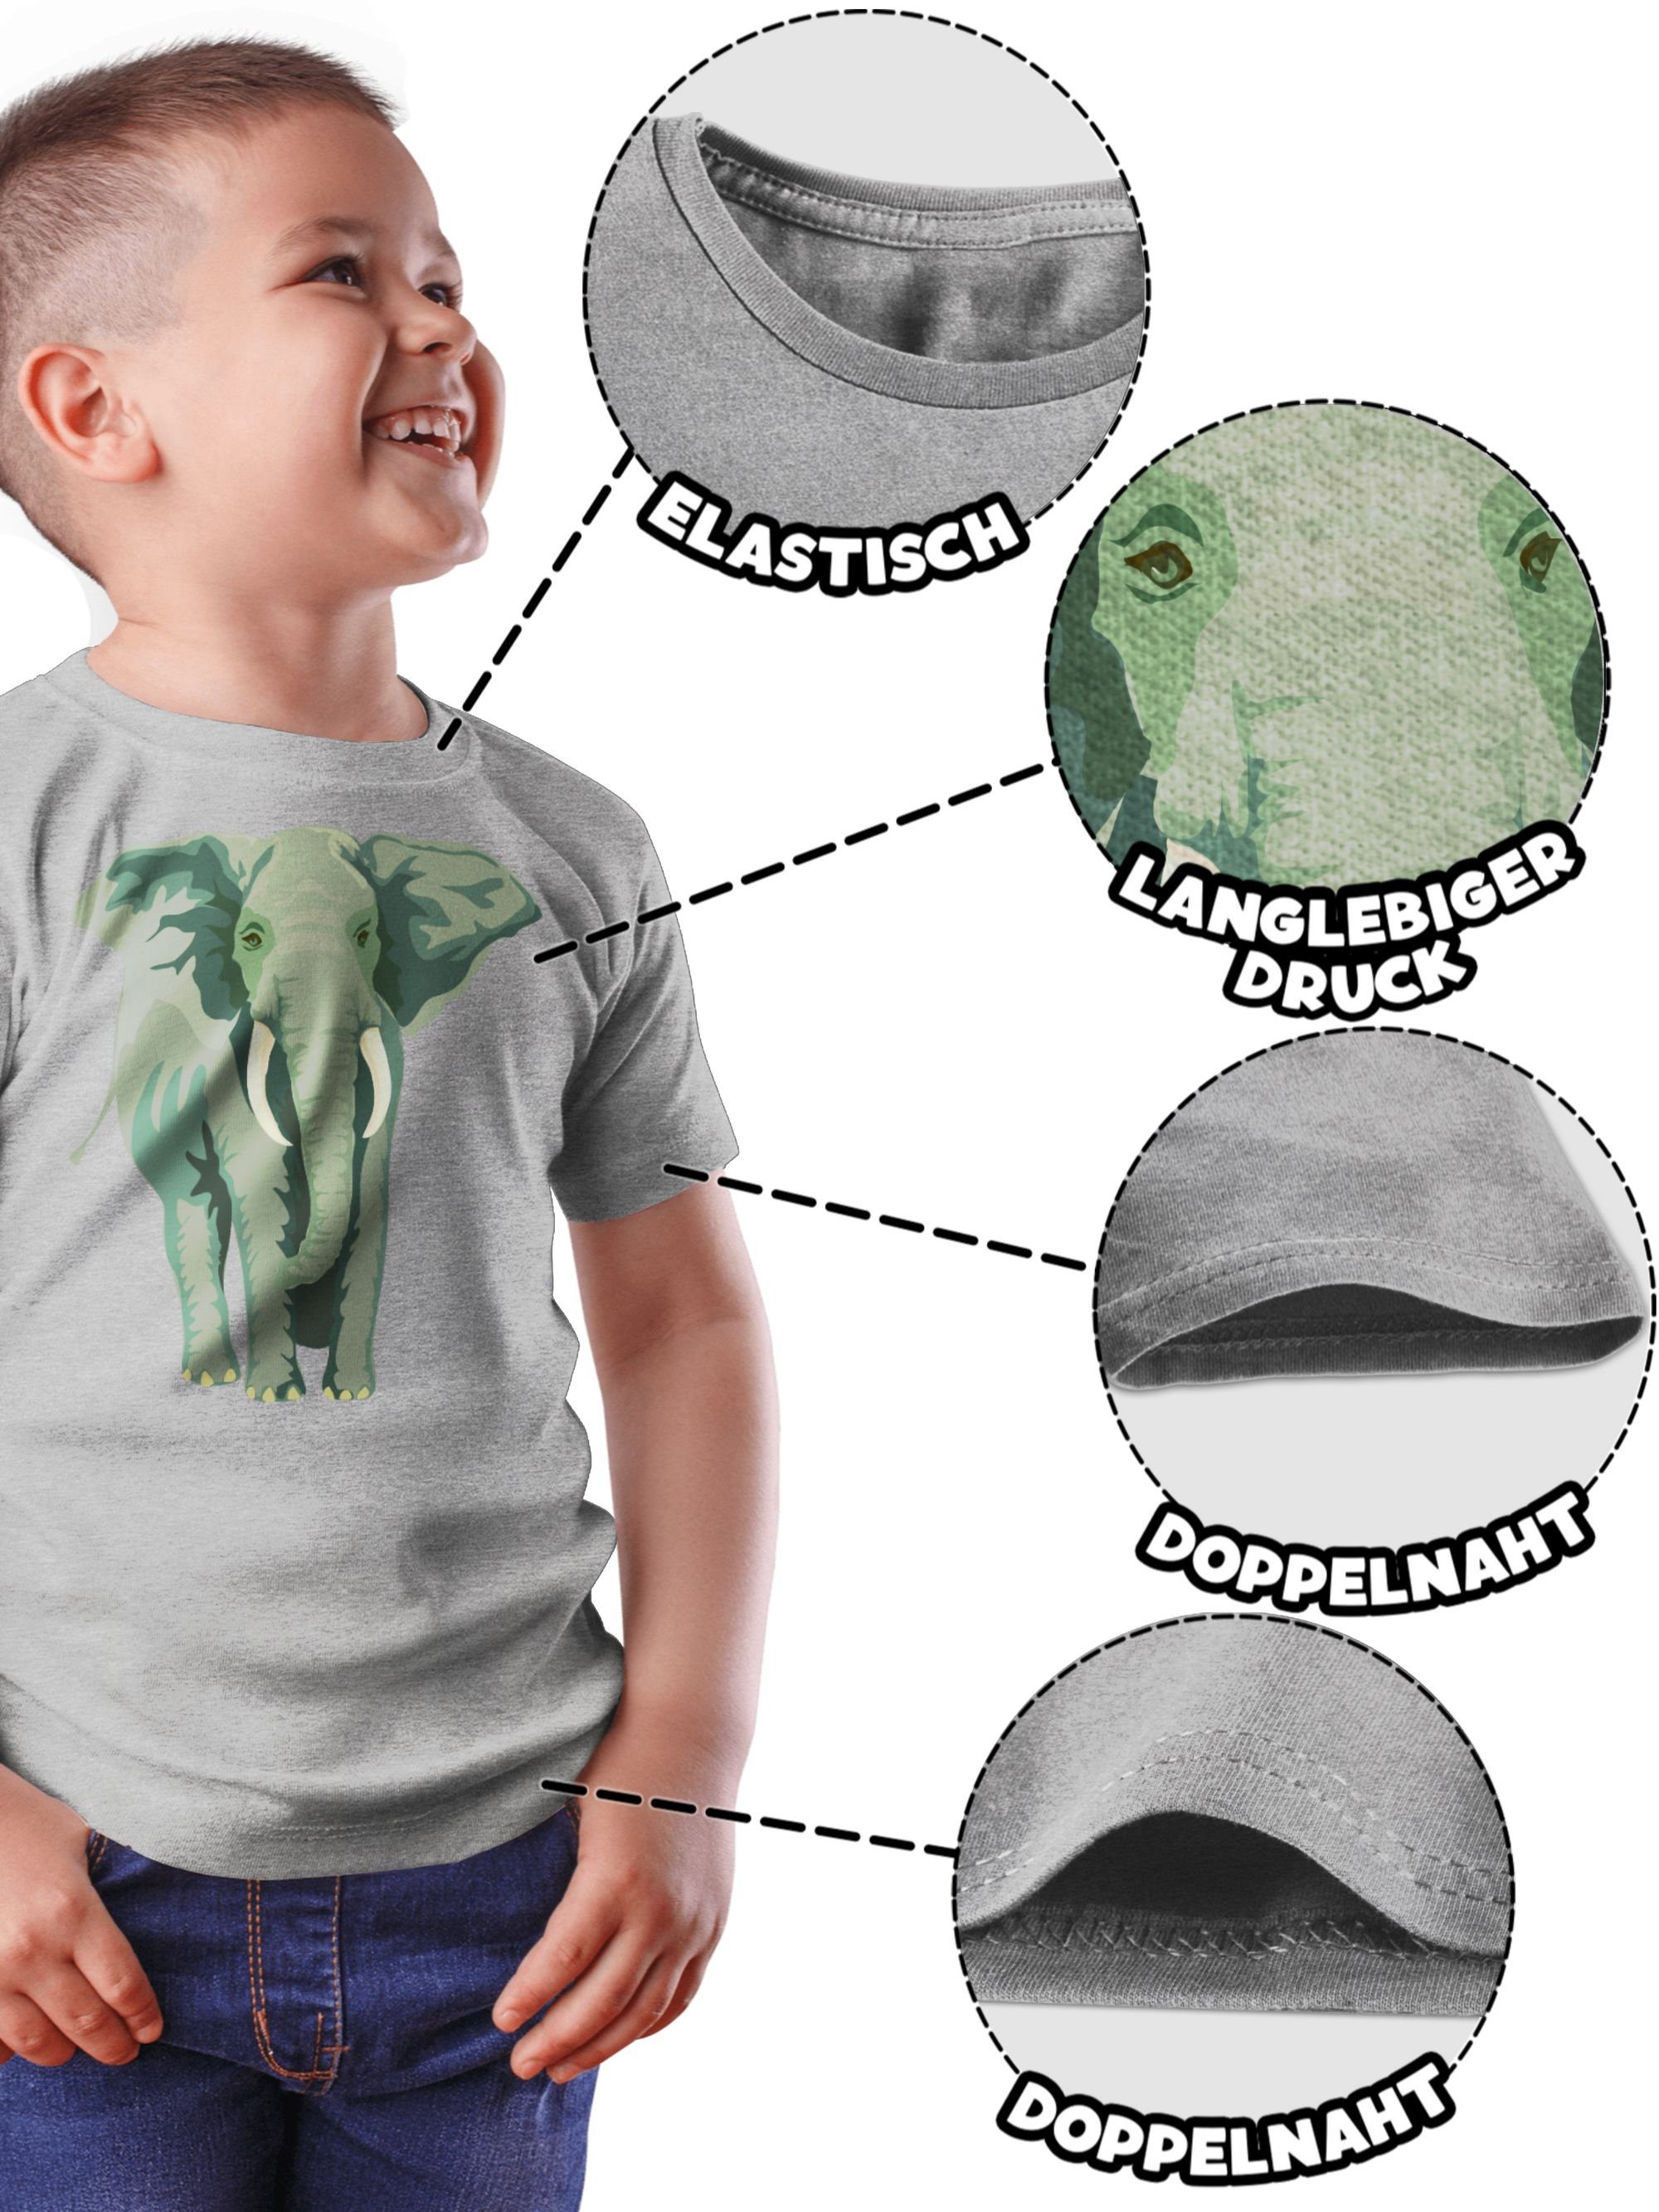 Elefant Shirtracer T-Shirt meliert Grau Animal Print 2 Tiermotiv